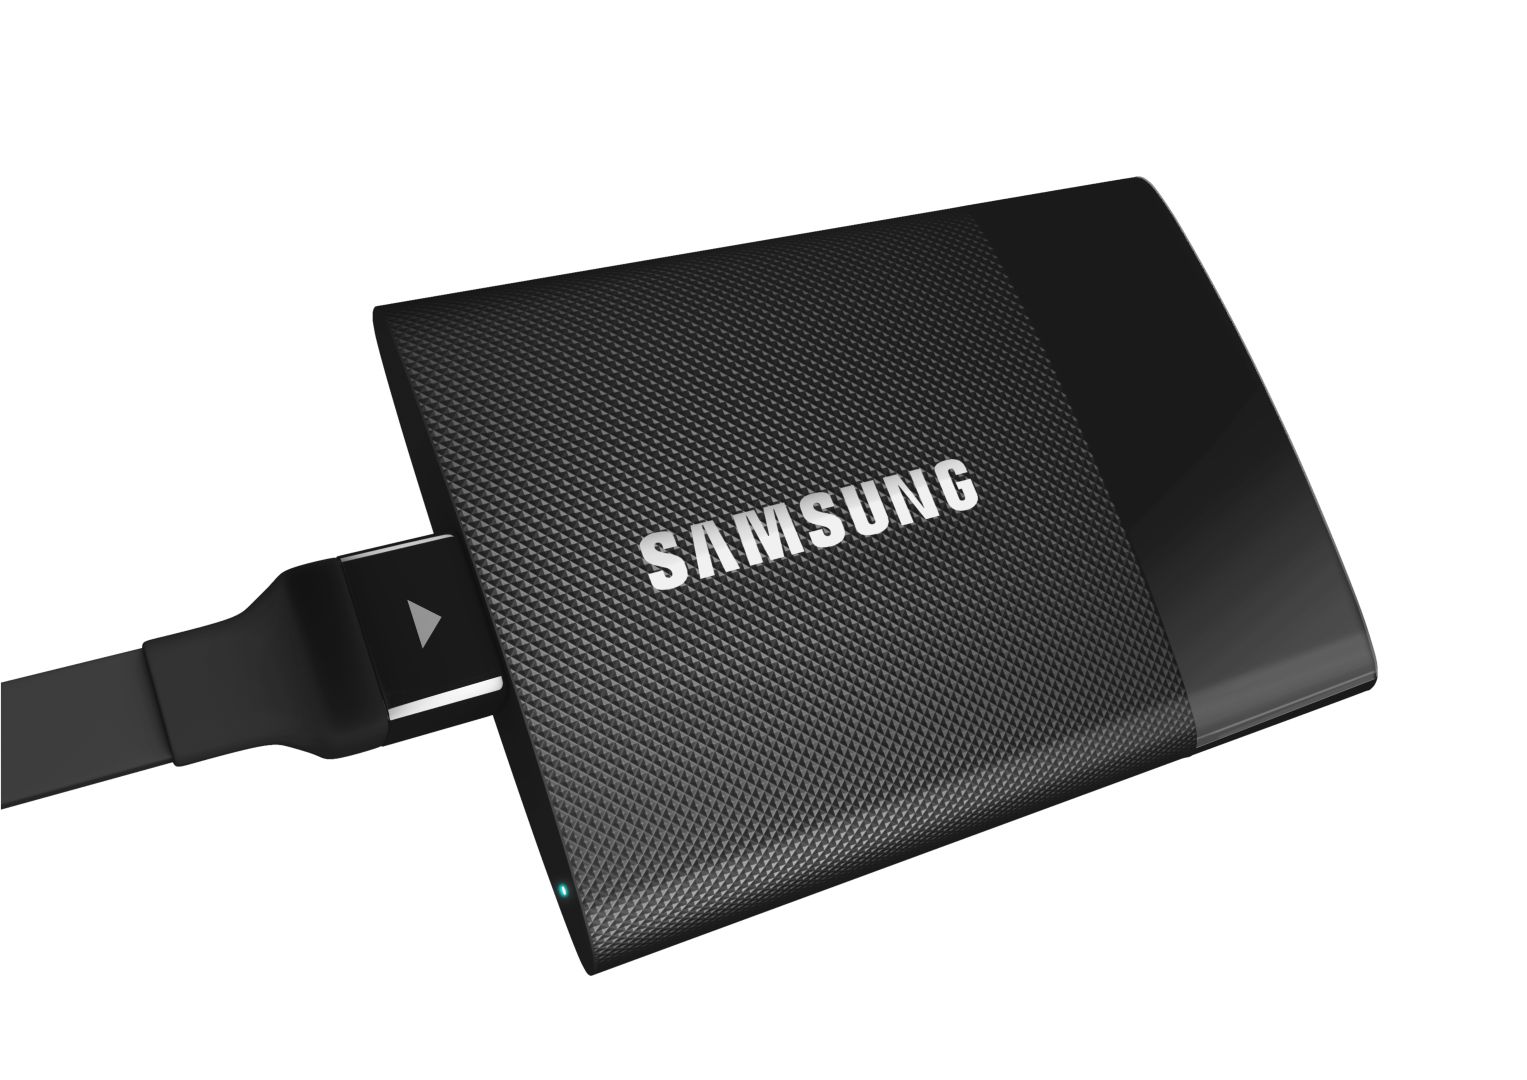 Samsung Portable SSD T1 mit USB 3.0 Verbindung